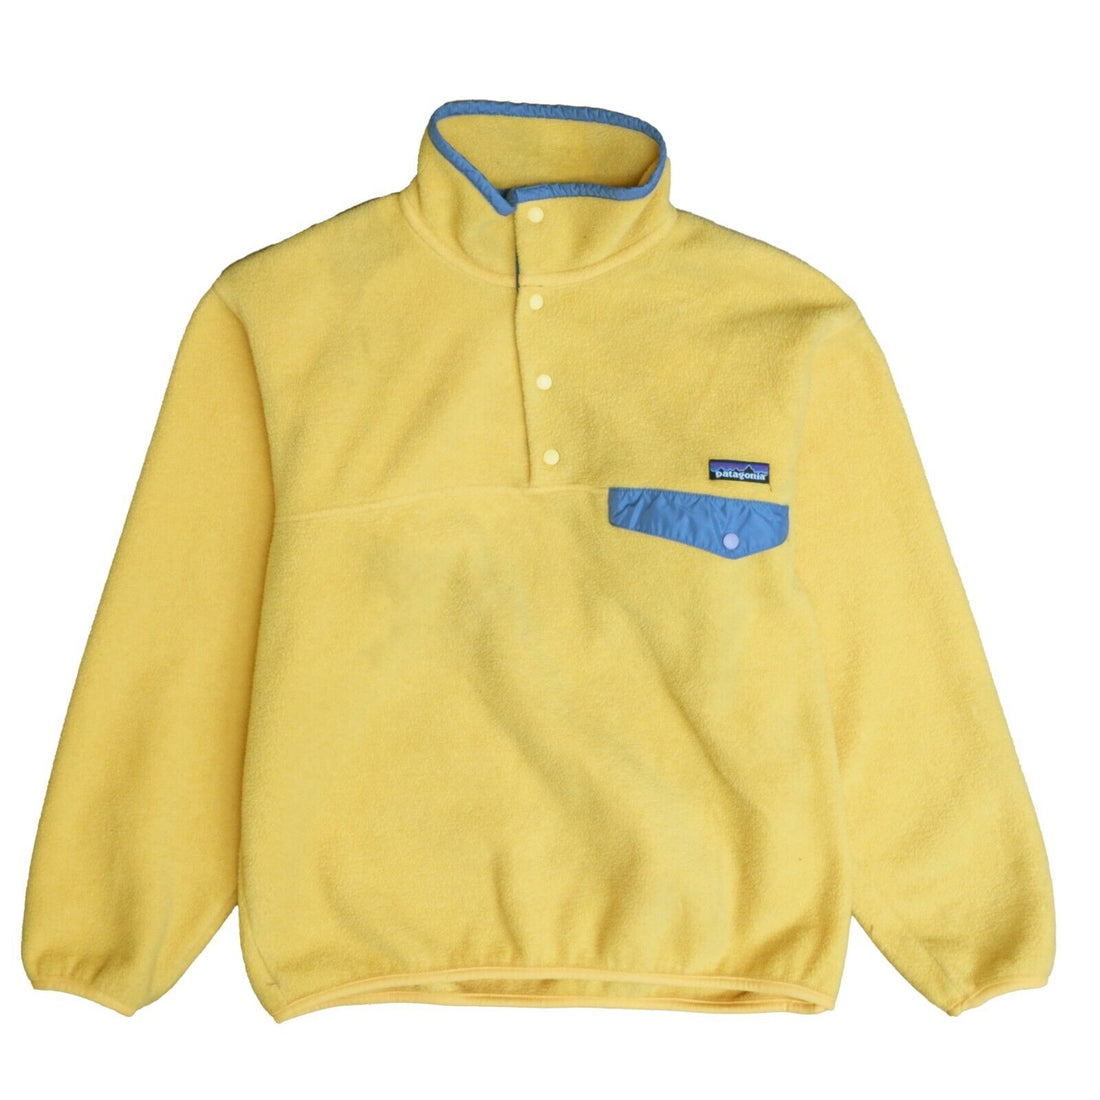 Vintage Patagonia Synchilla Snap-T Fleece Jacket Size Medium Yellow 90s